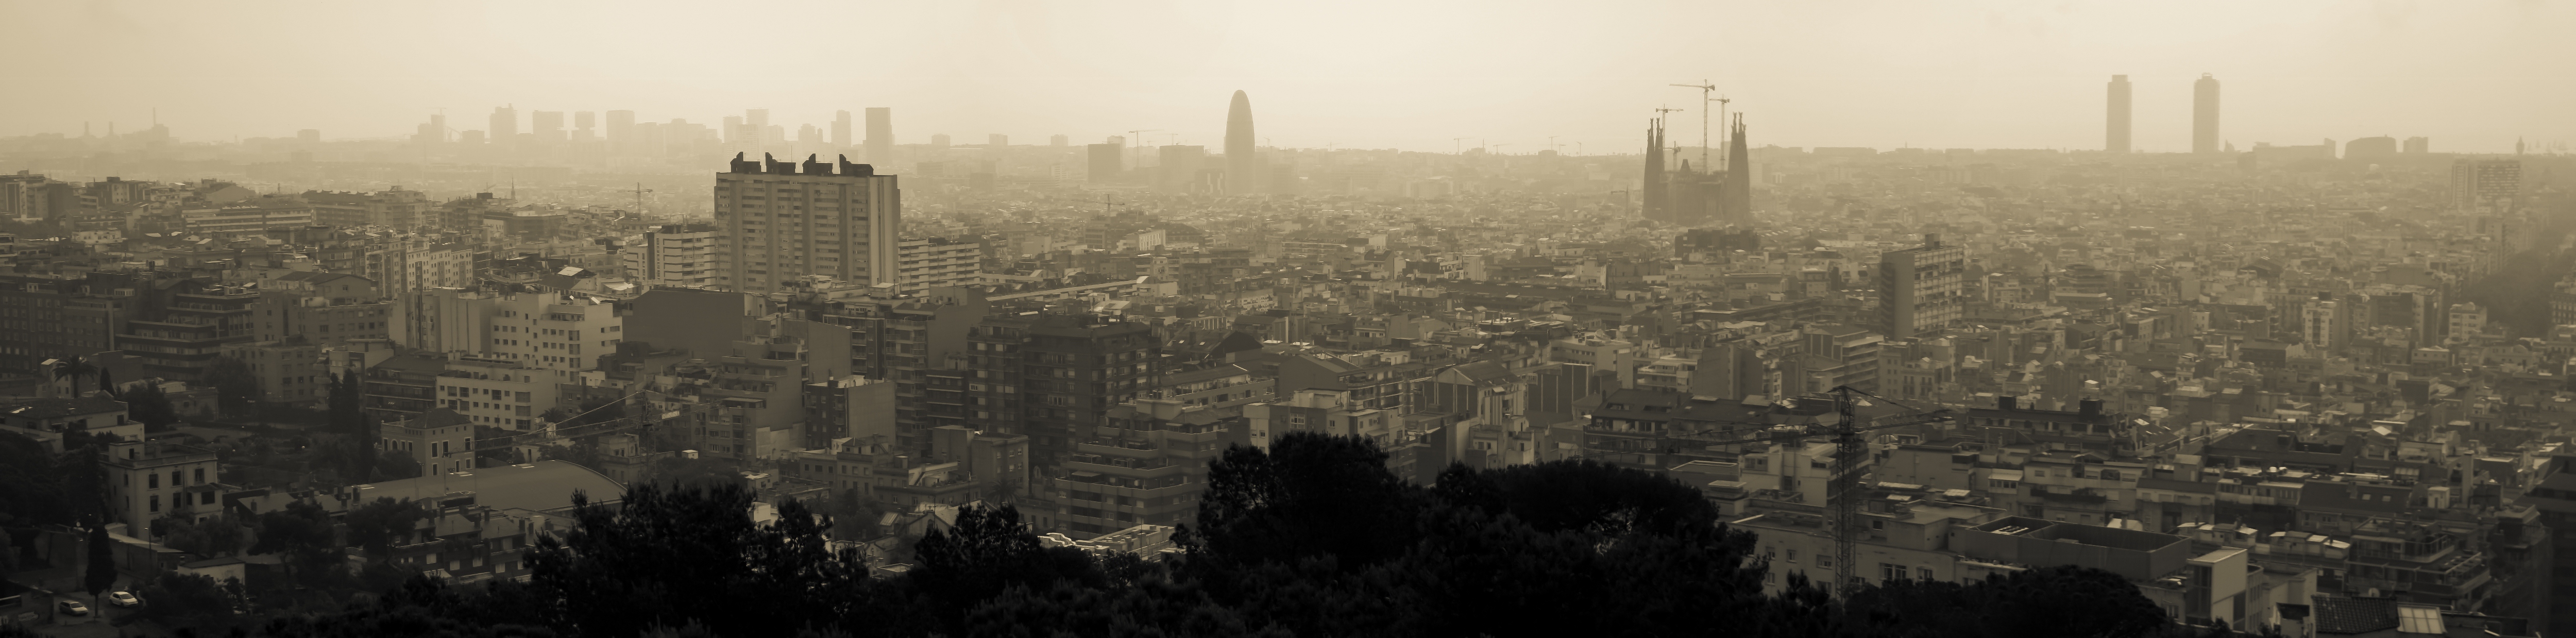 Barcelona_Ayrcan_Flickr